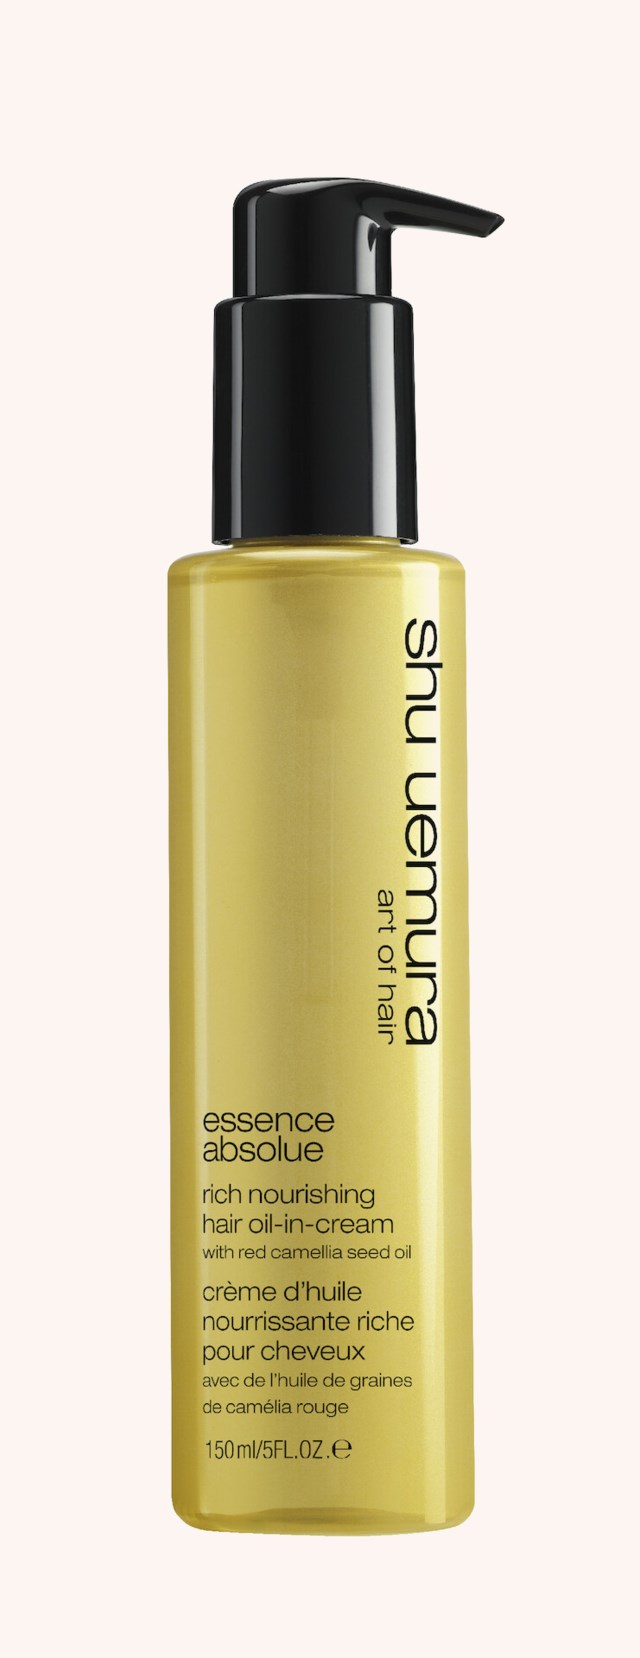 Essence Absolue Rich Nourishing Hair Oil-In-Cream 150 ml